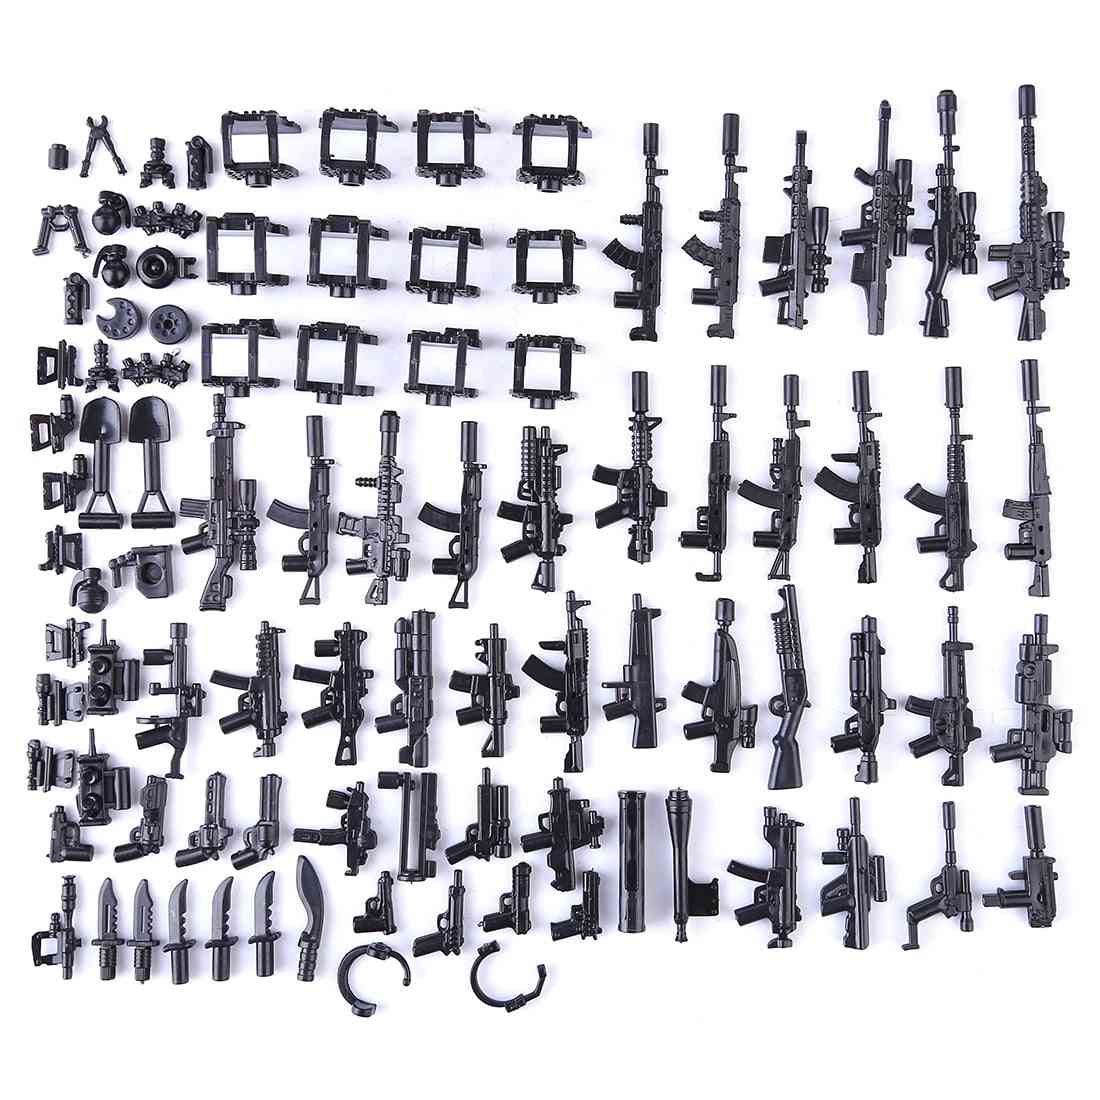 малки частици градивен елемент военно оръжие аксесоари комплект играчки